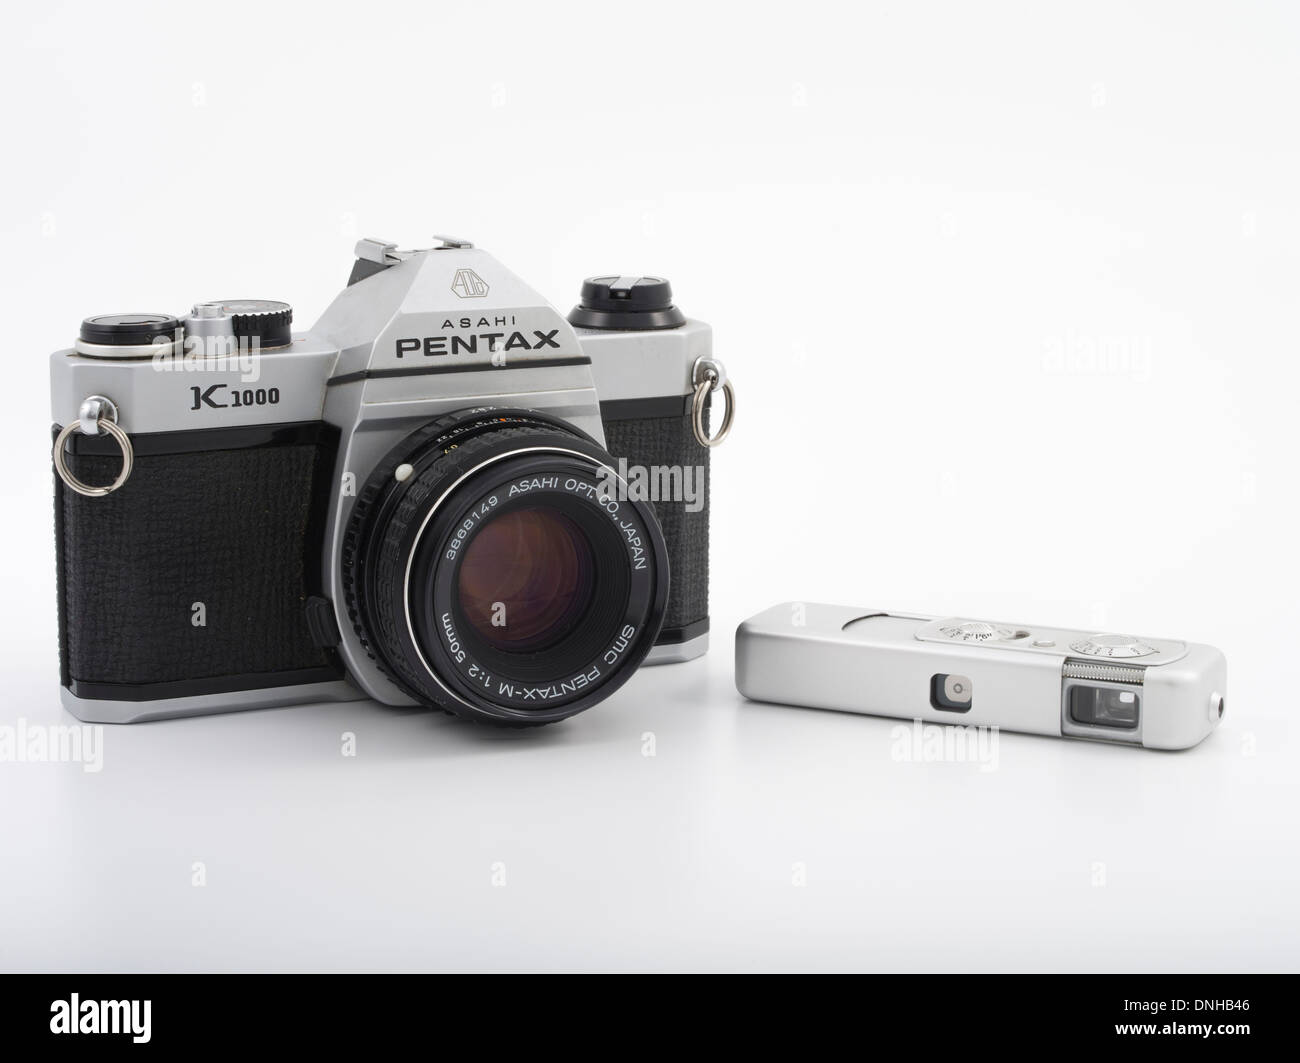 Minox Wetzlar III Sub-Miniature Spy Camera with Asahi Pentax K1000 35mm camera. Stock Photo